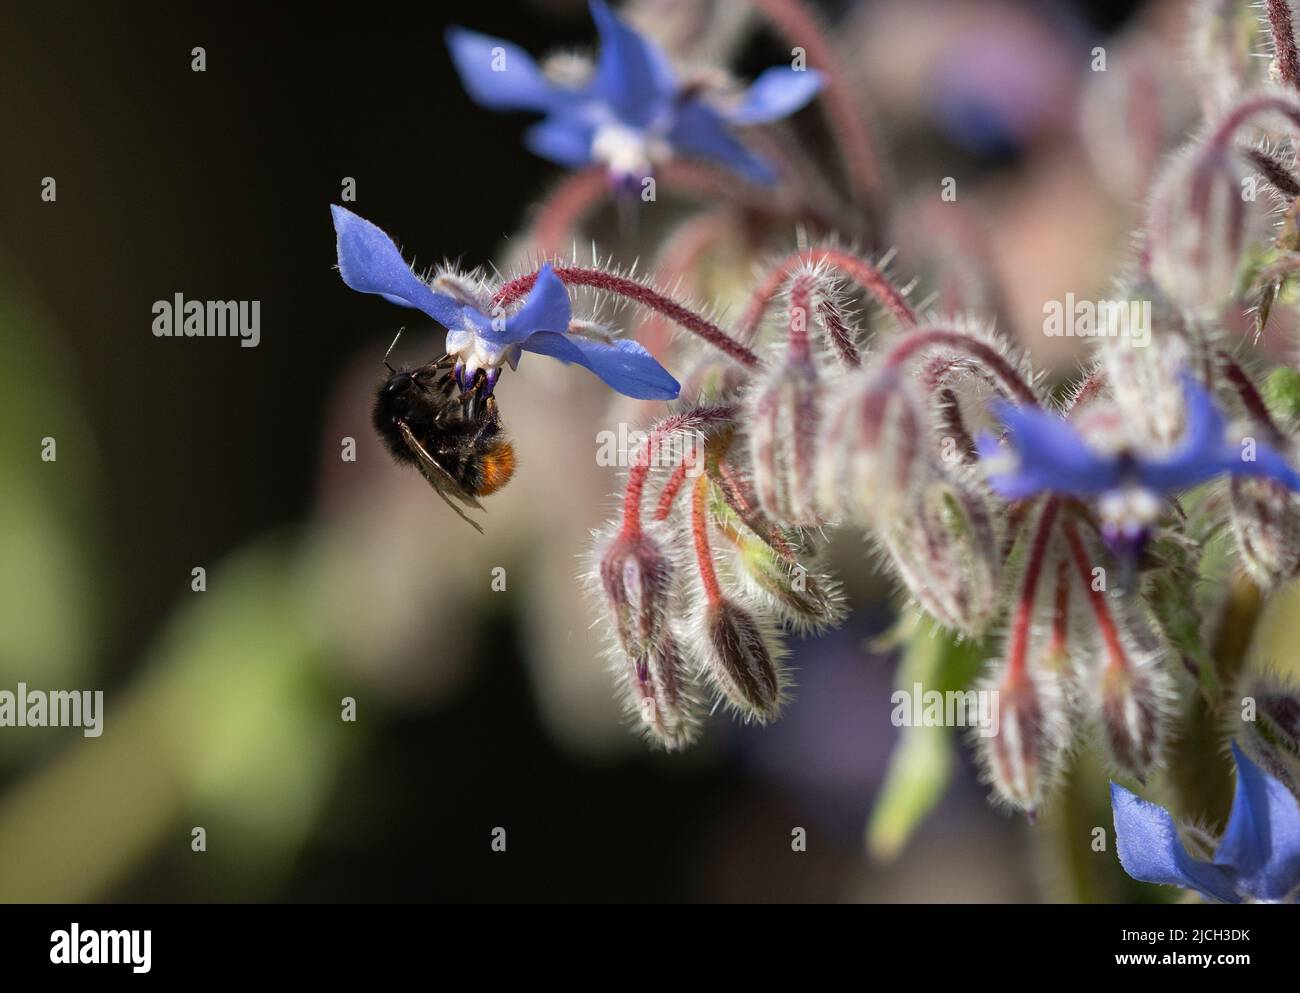 Borage flowers attracting bees in herb garden Stock Photo